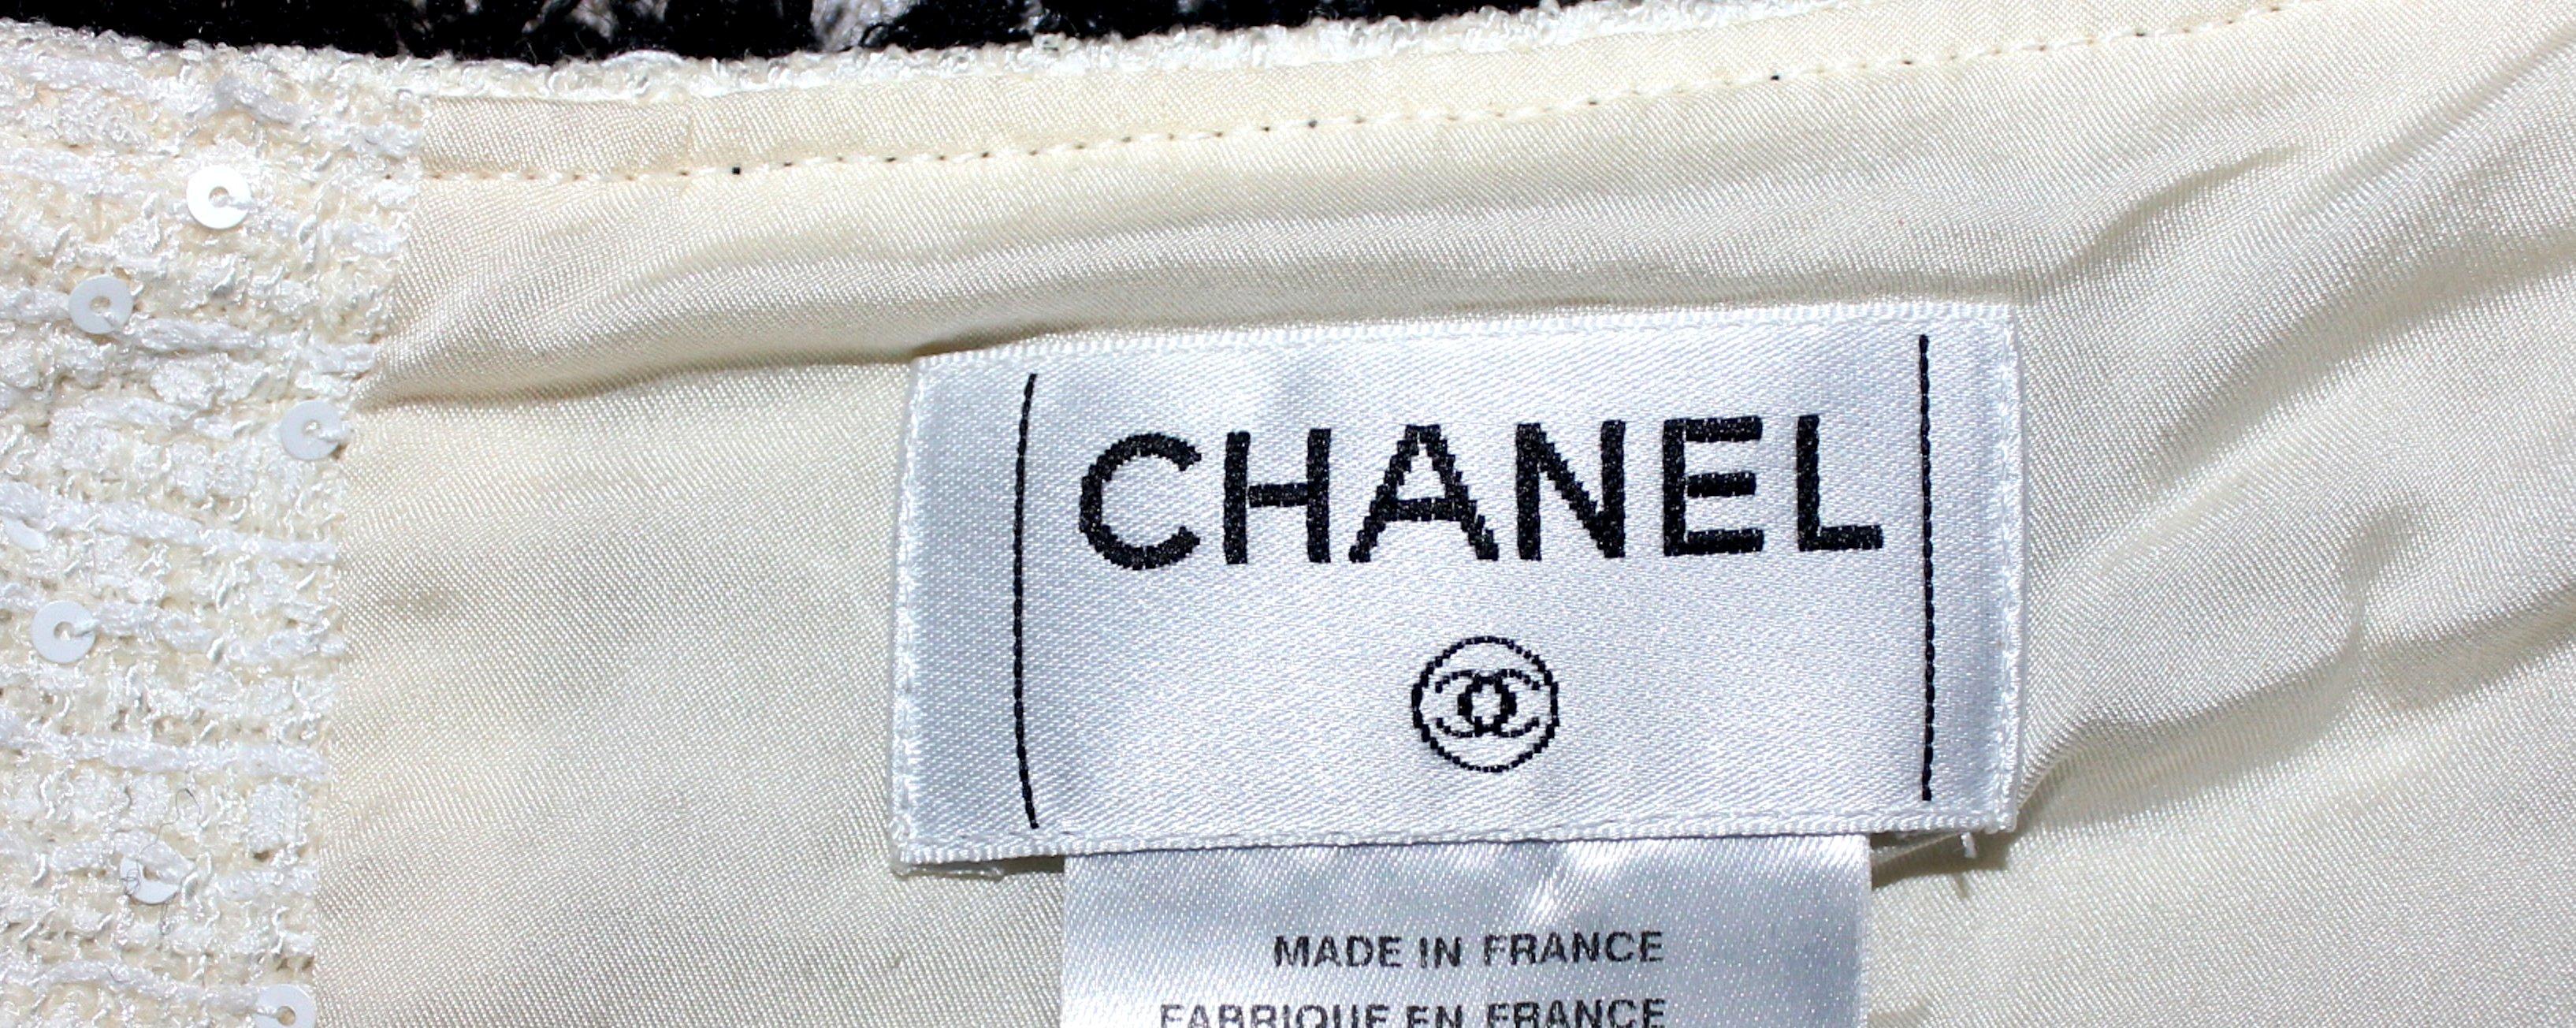 UNWORN Chanel Signature Monochrome Sequin Fantasy Tweed Jacket 38 For Sale 3